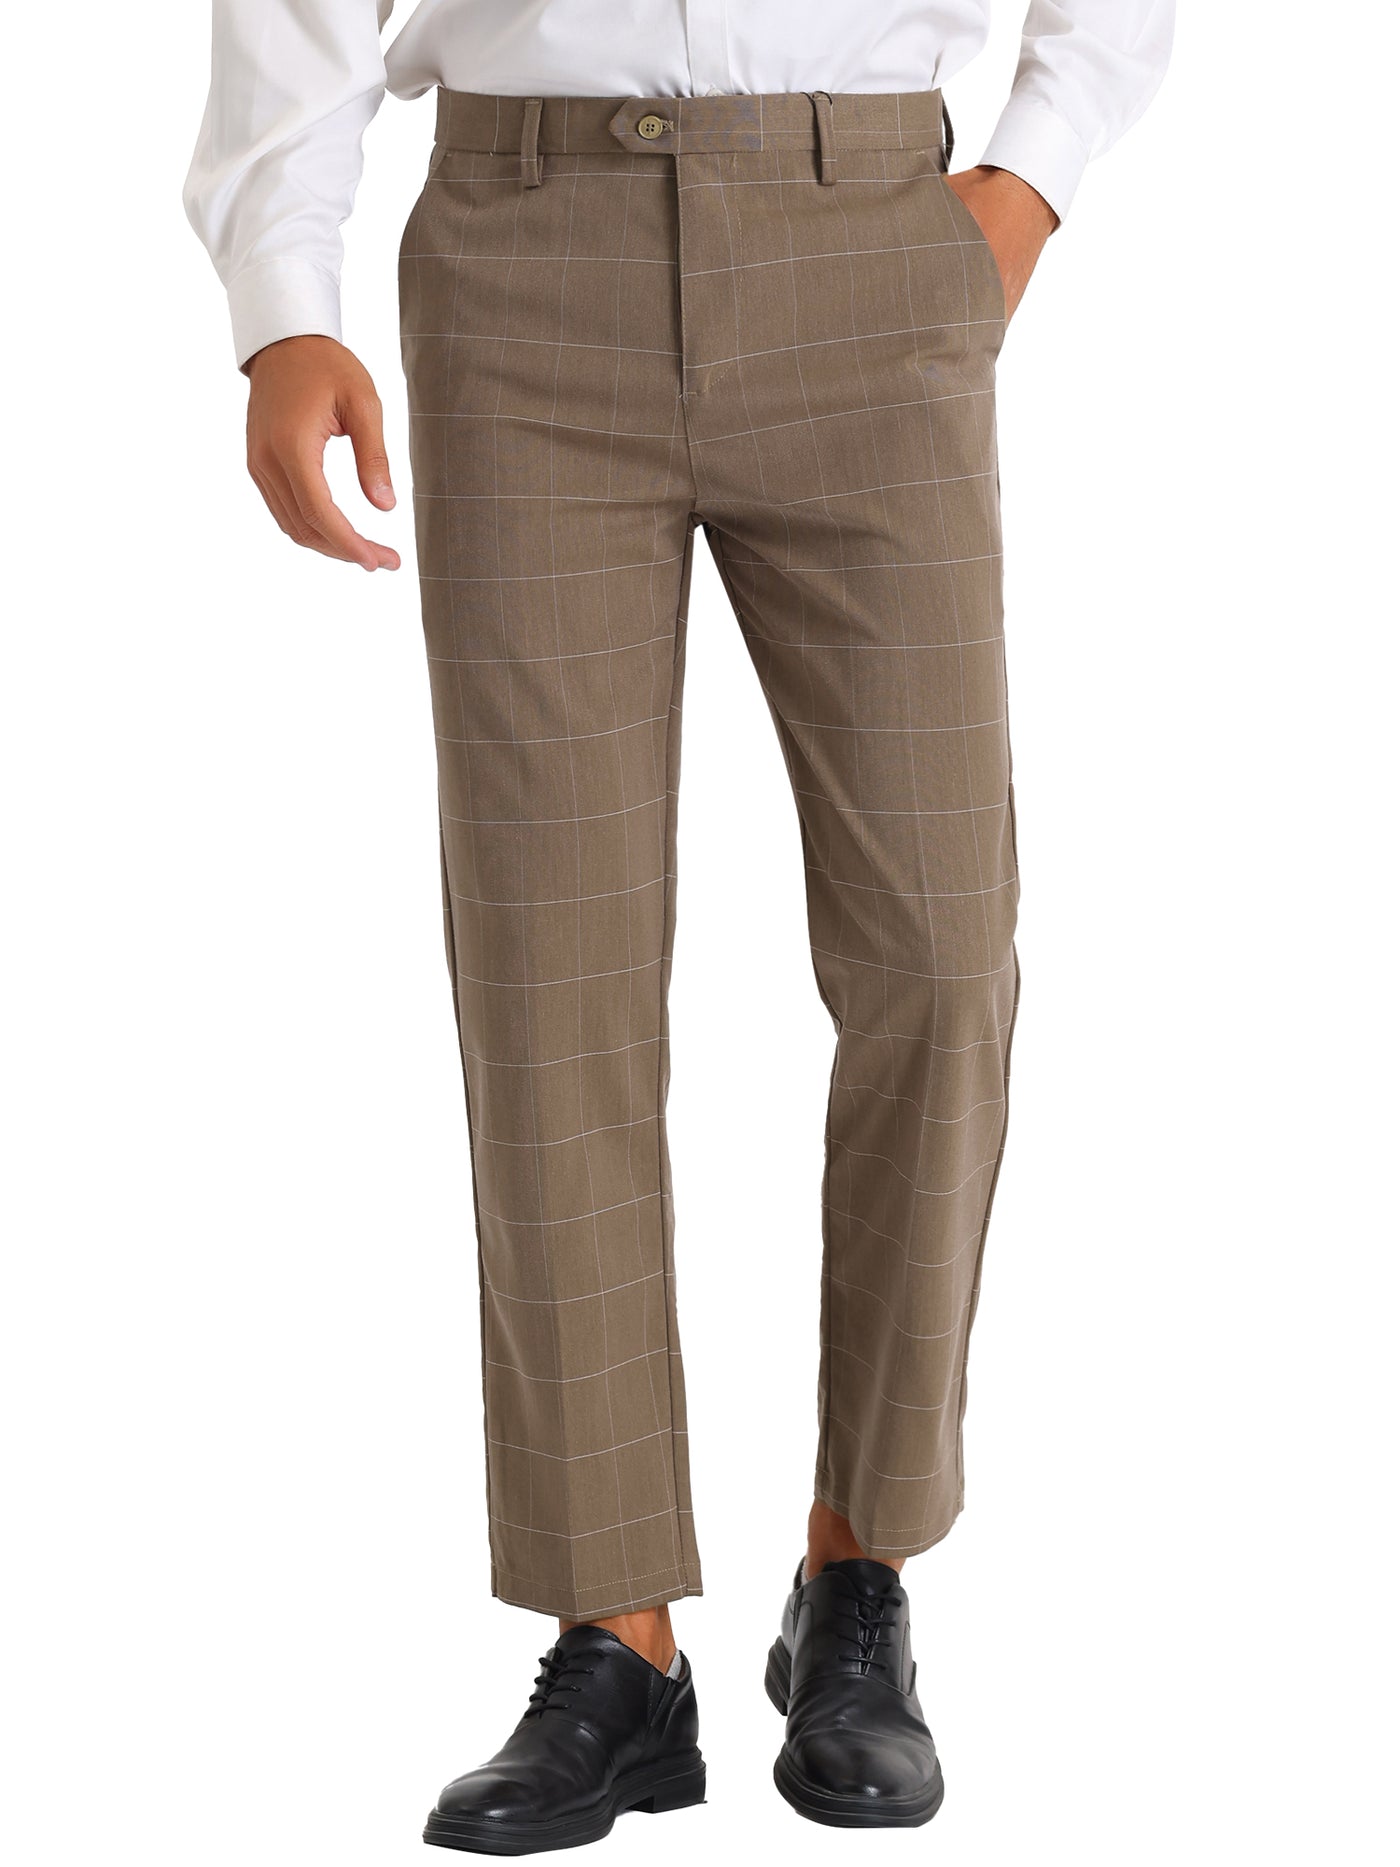 Bublédon Plaid Dress Pants for Men's Slim Fit Flat Front Stretch Business Checked Trousers